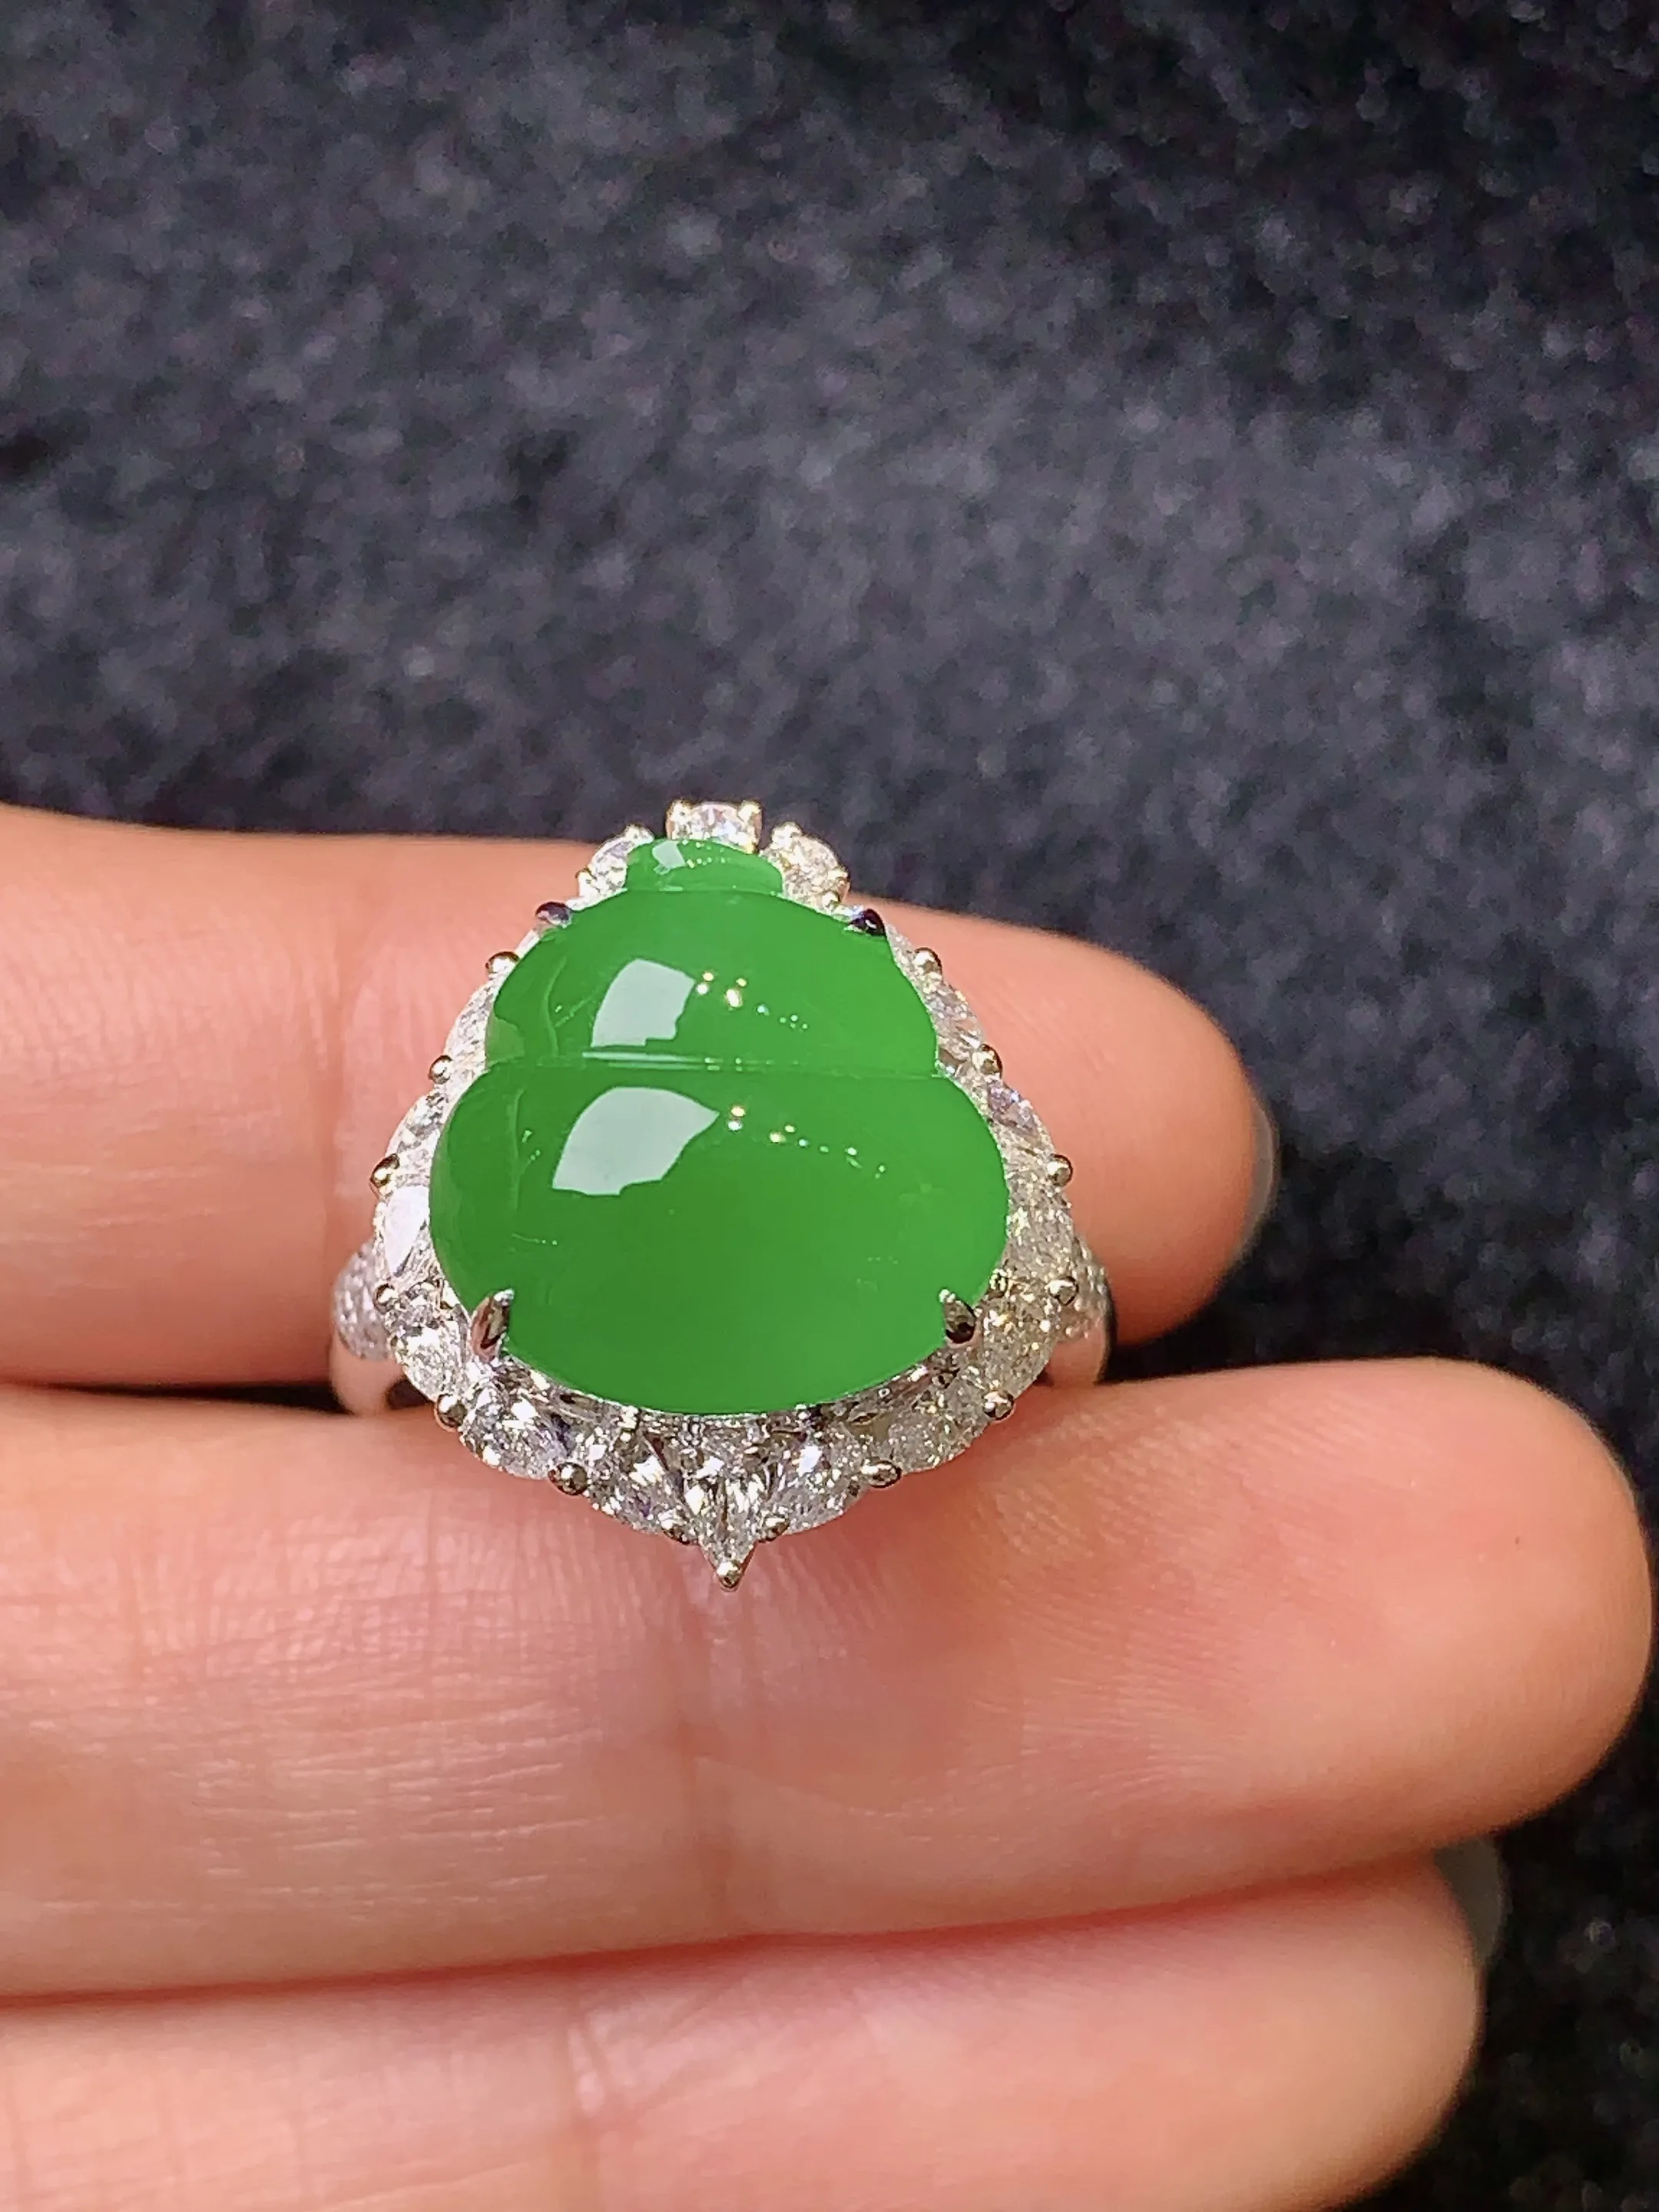 18k金镶嵌满绿葫芦戒指 玉质细腻 色泽艳丽 款式新颖时尚唯美 圈口13.5 整体尺寸18.7*16